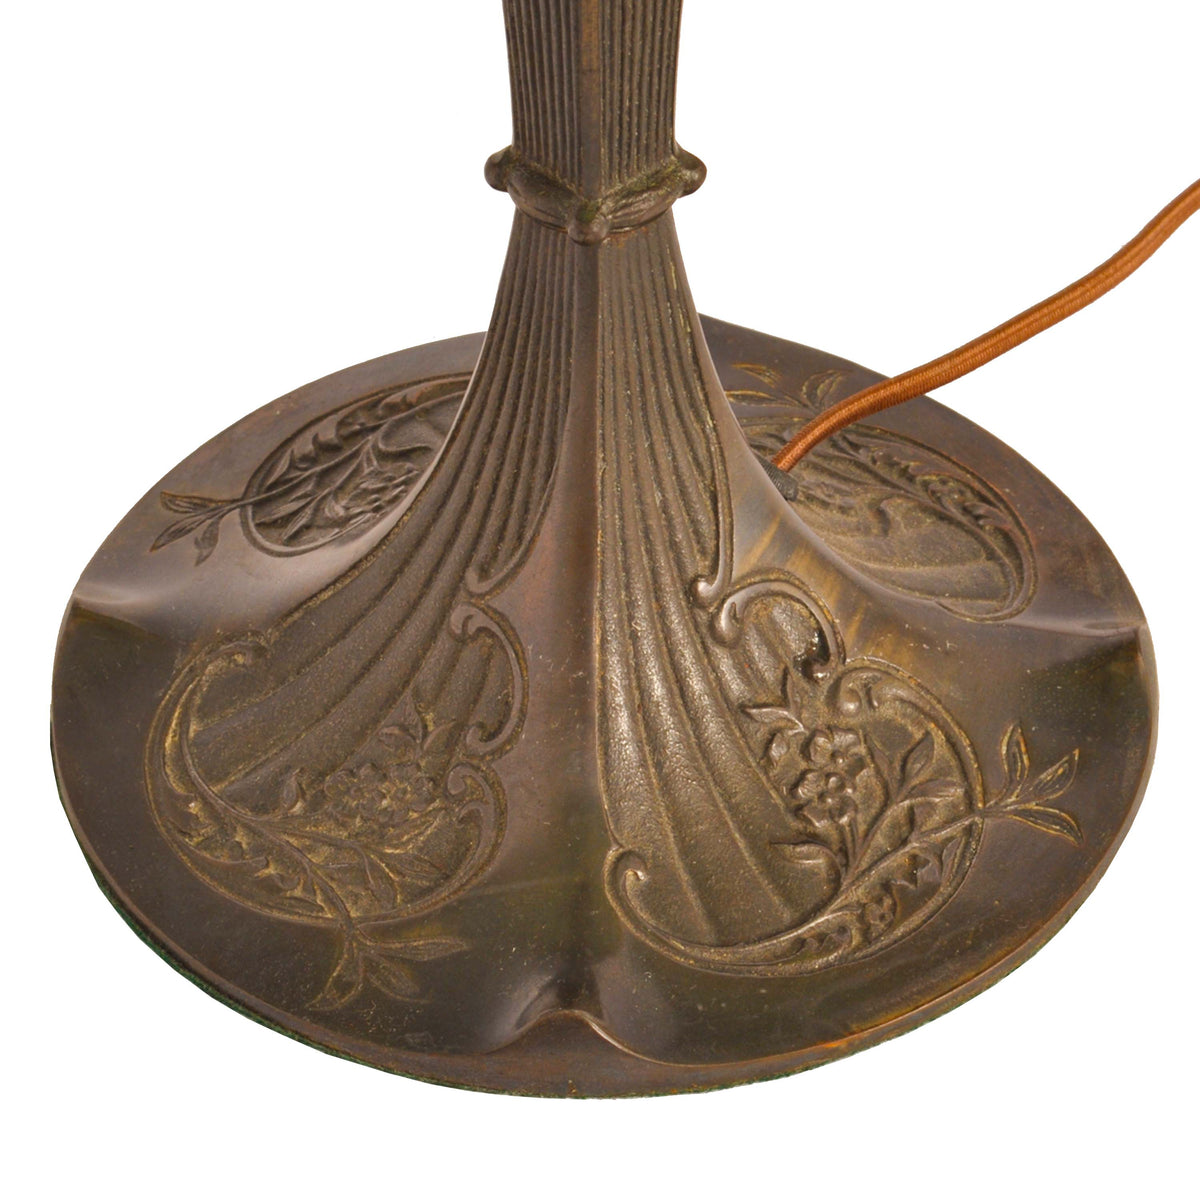 Antique American Art Nouveau Bronze & Leaded Glass Table Lamp by Wilkinson, circa 1910